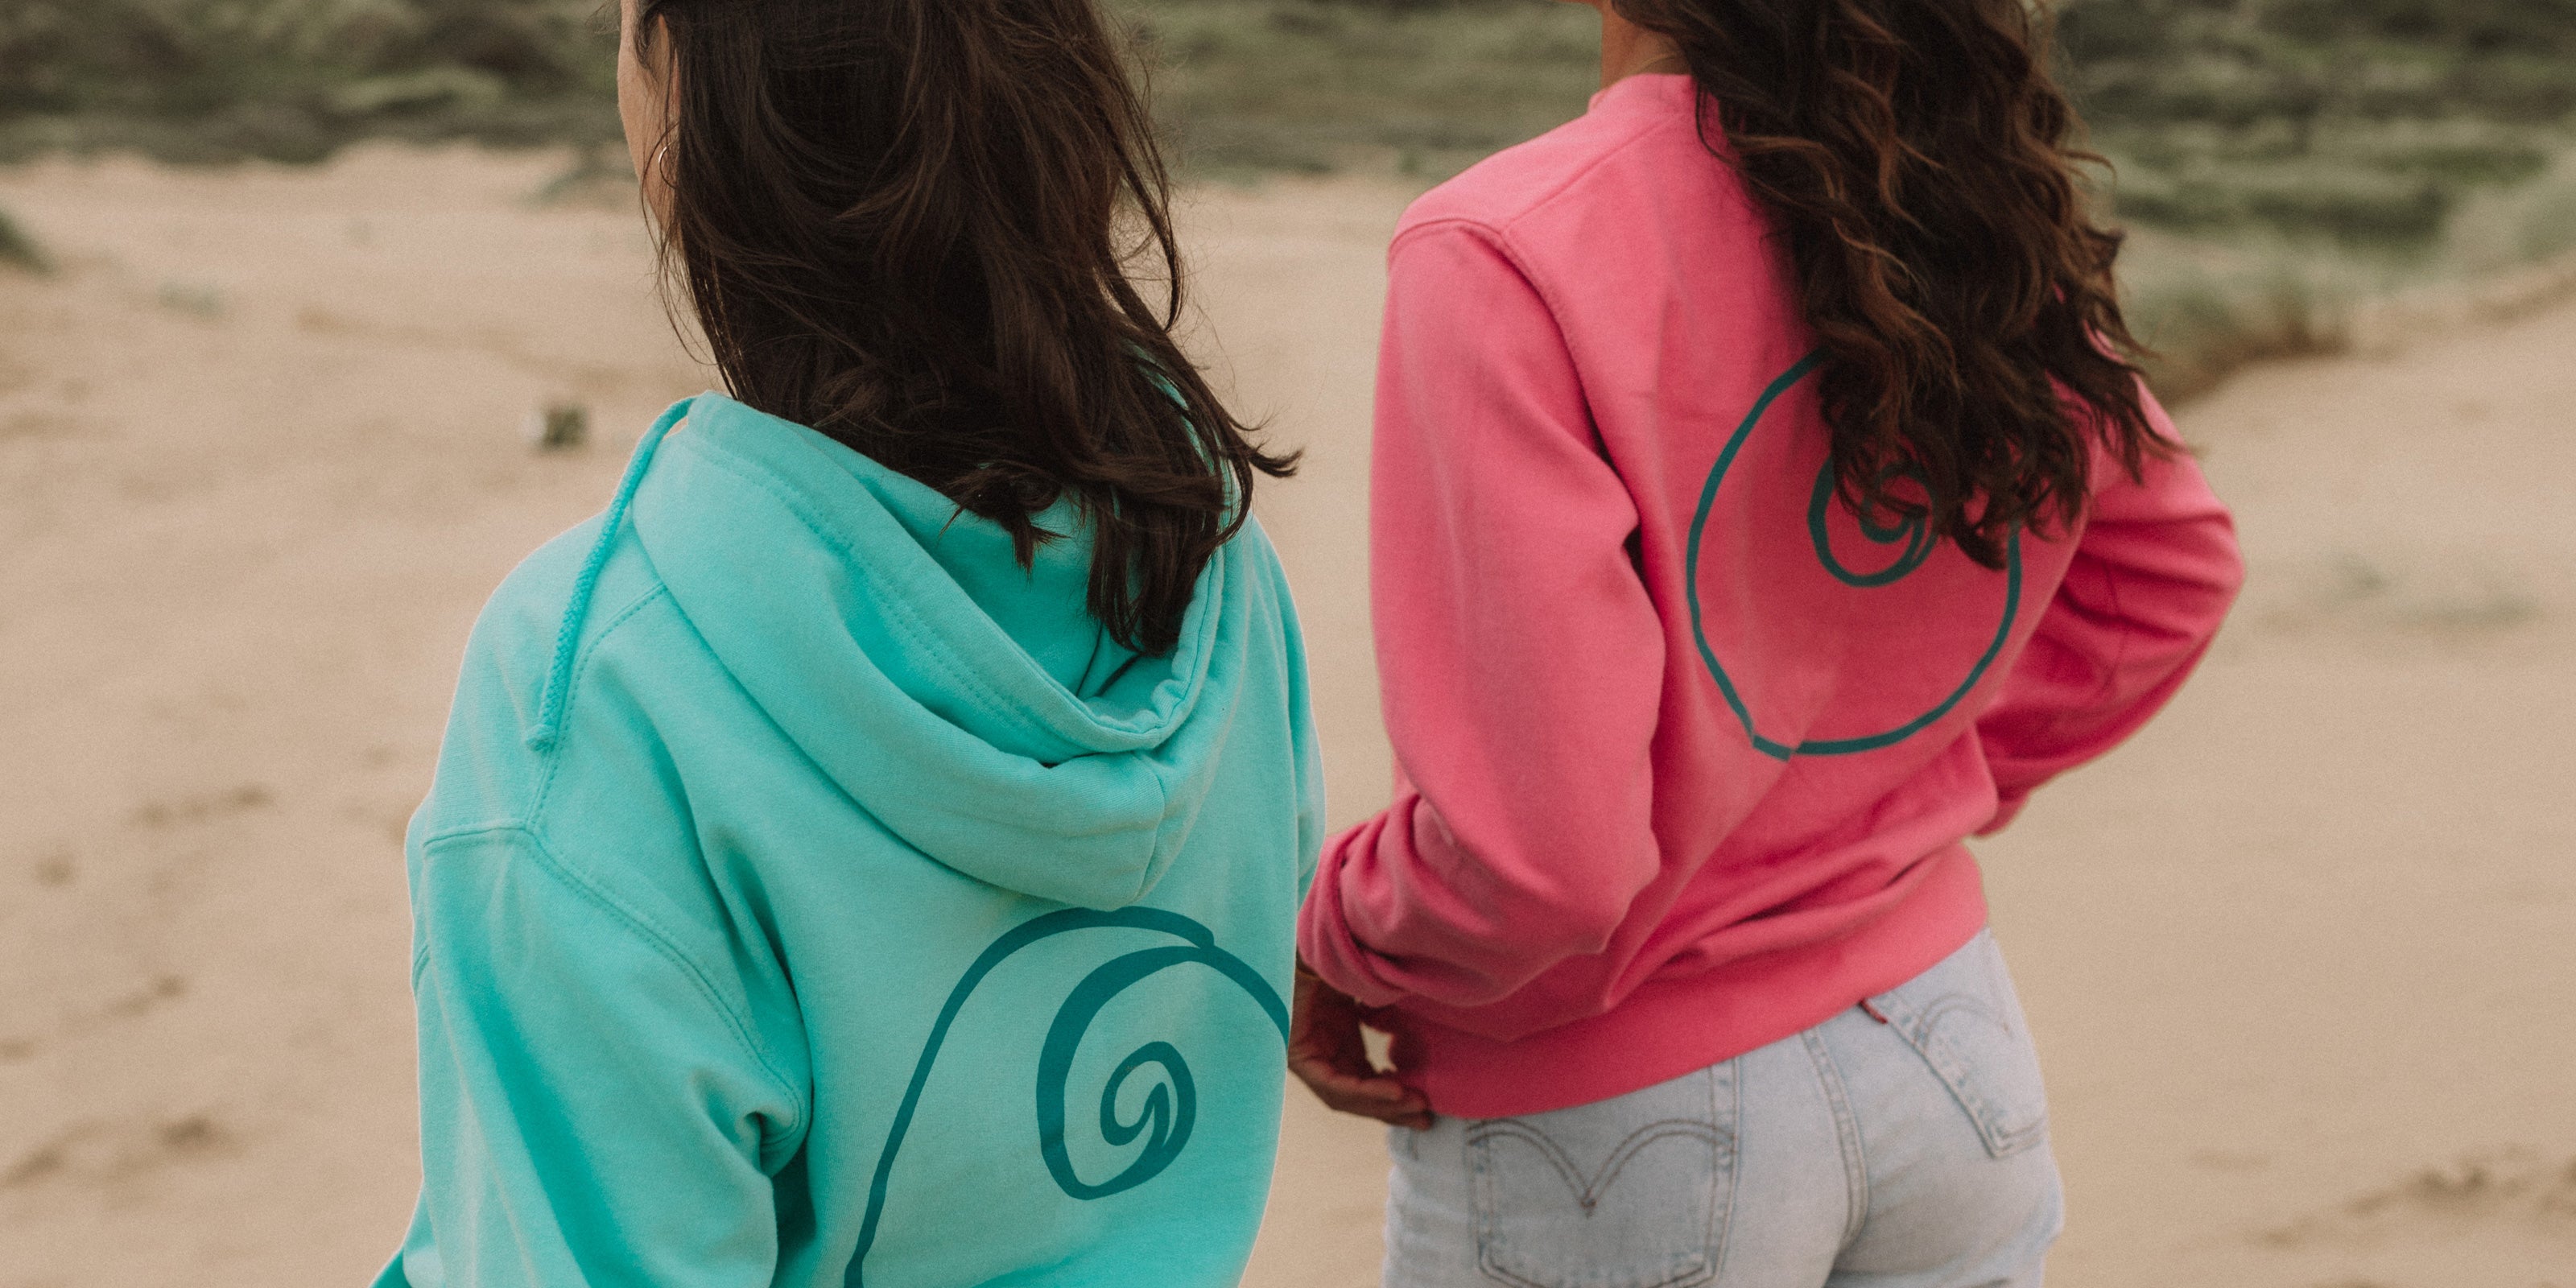 Turquoise and Pink Nalu Sweatshirt and Hoodies worn on the beach.